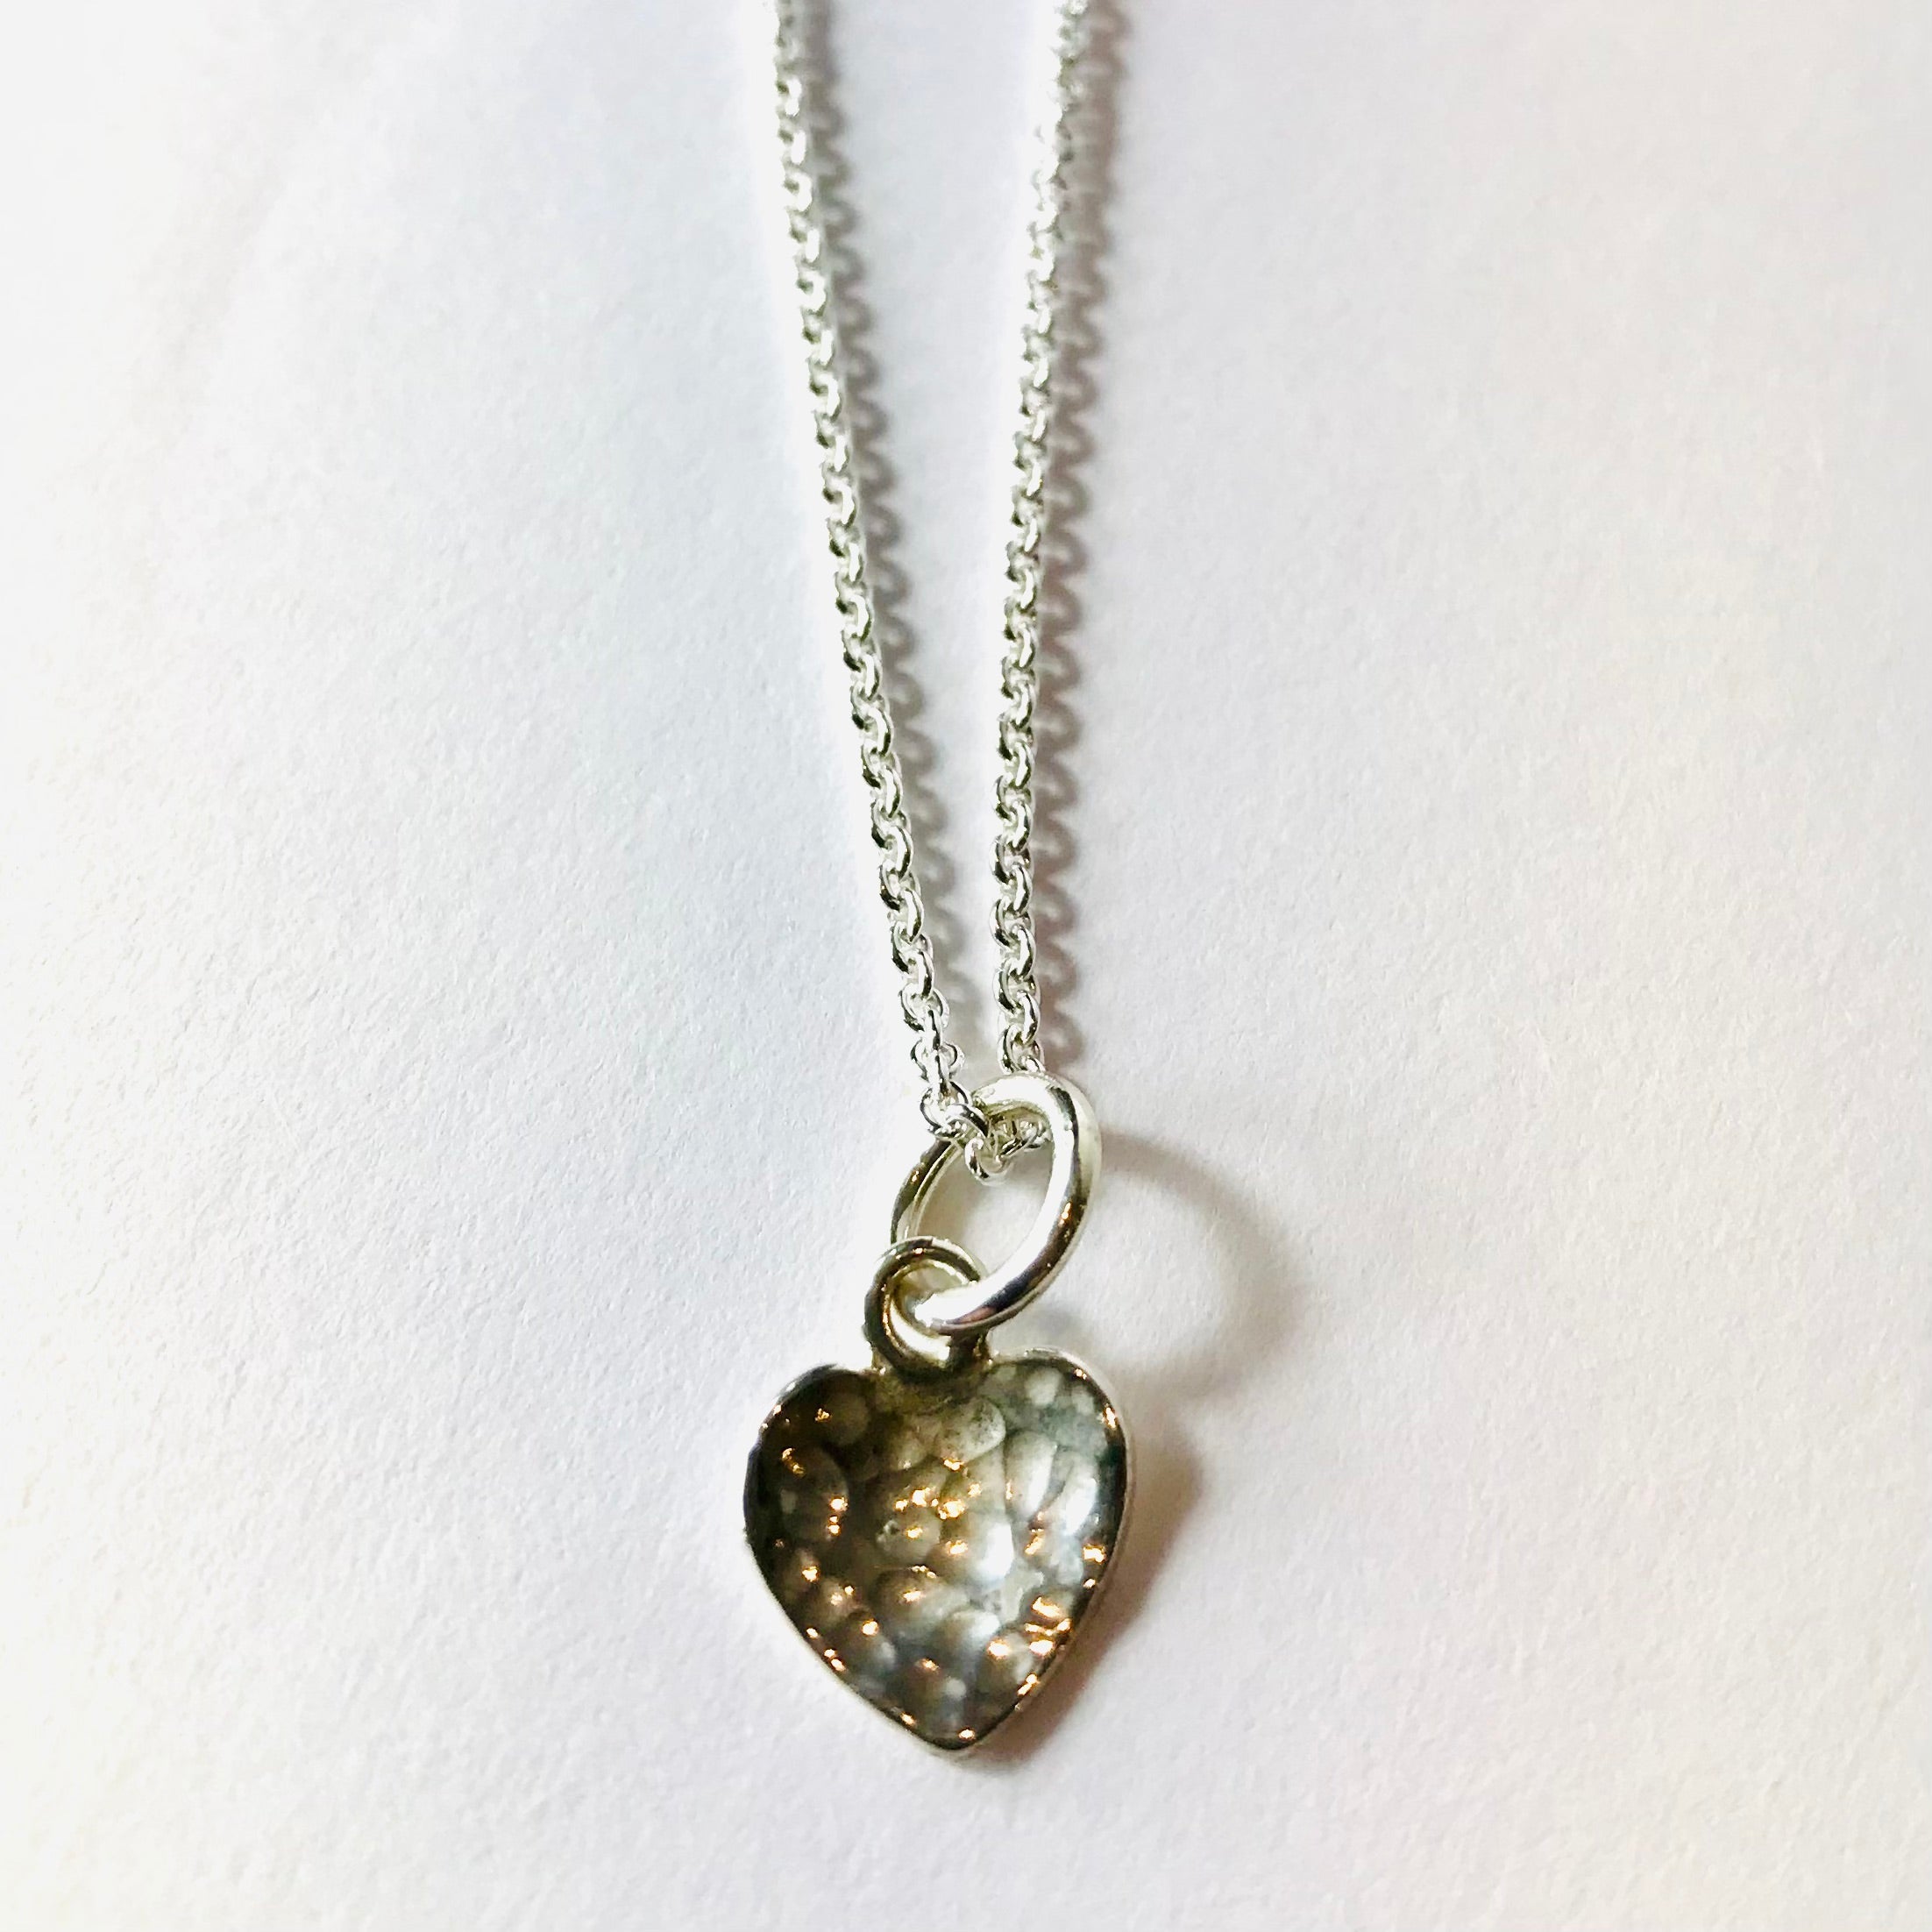 Texture Heart Necklace - The Nancy Smillie Shop - Art, Jewellery & Designer Gifts Glasgow